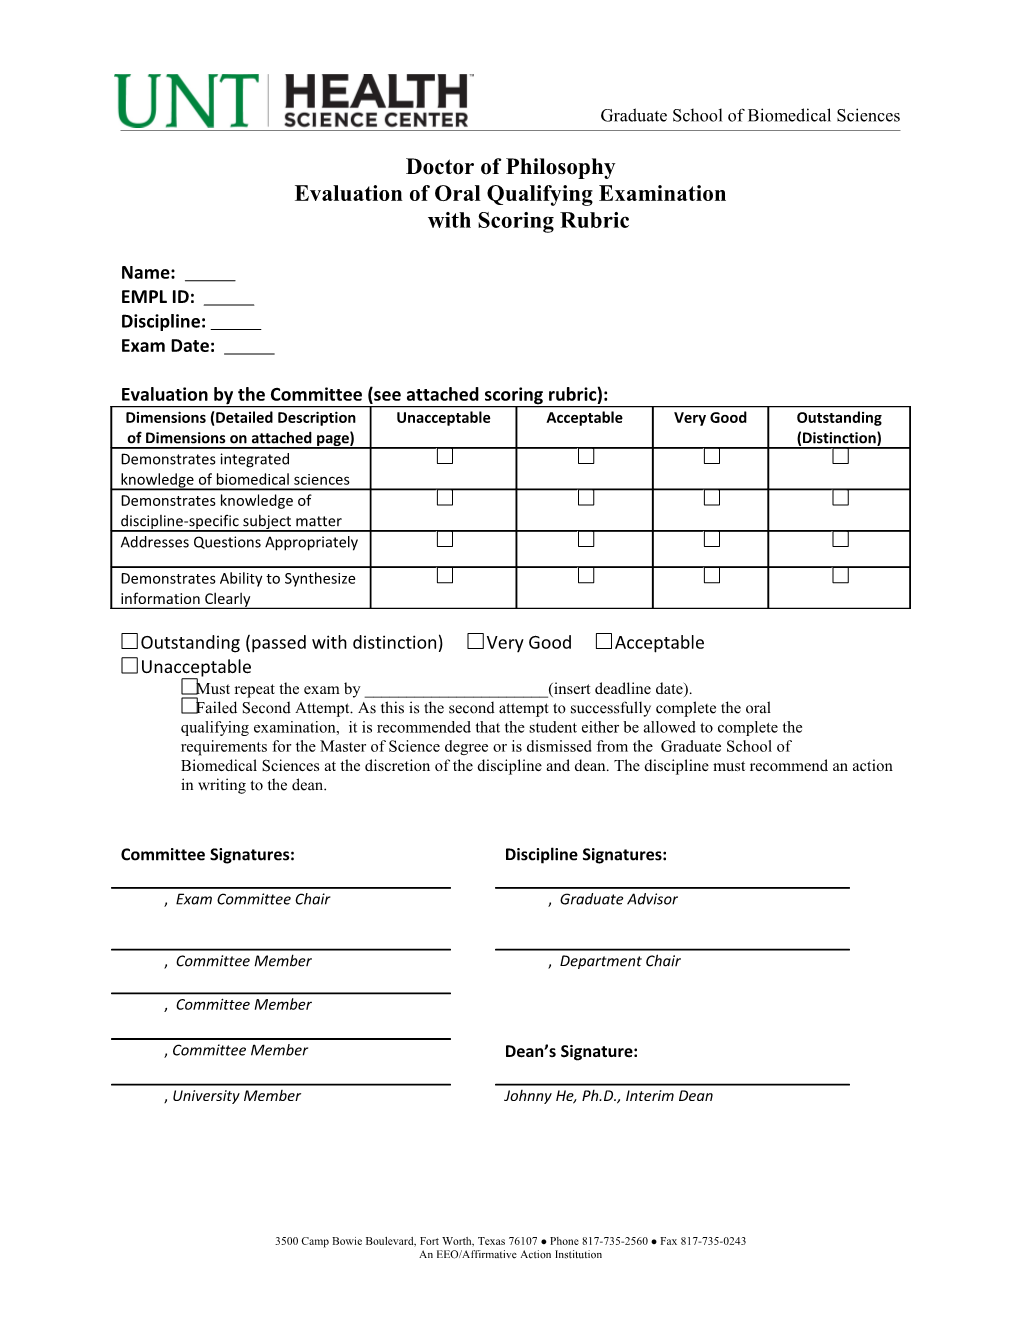 Evaluation of Oral Qualifying Examinationwith Scoring Rubric